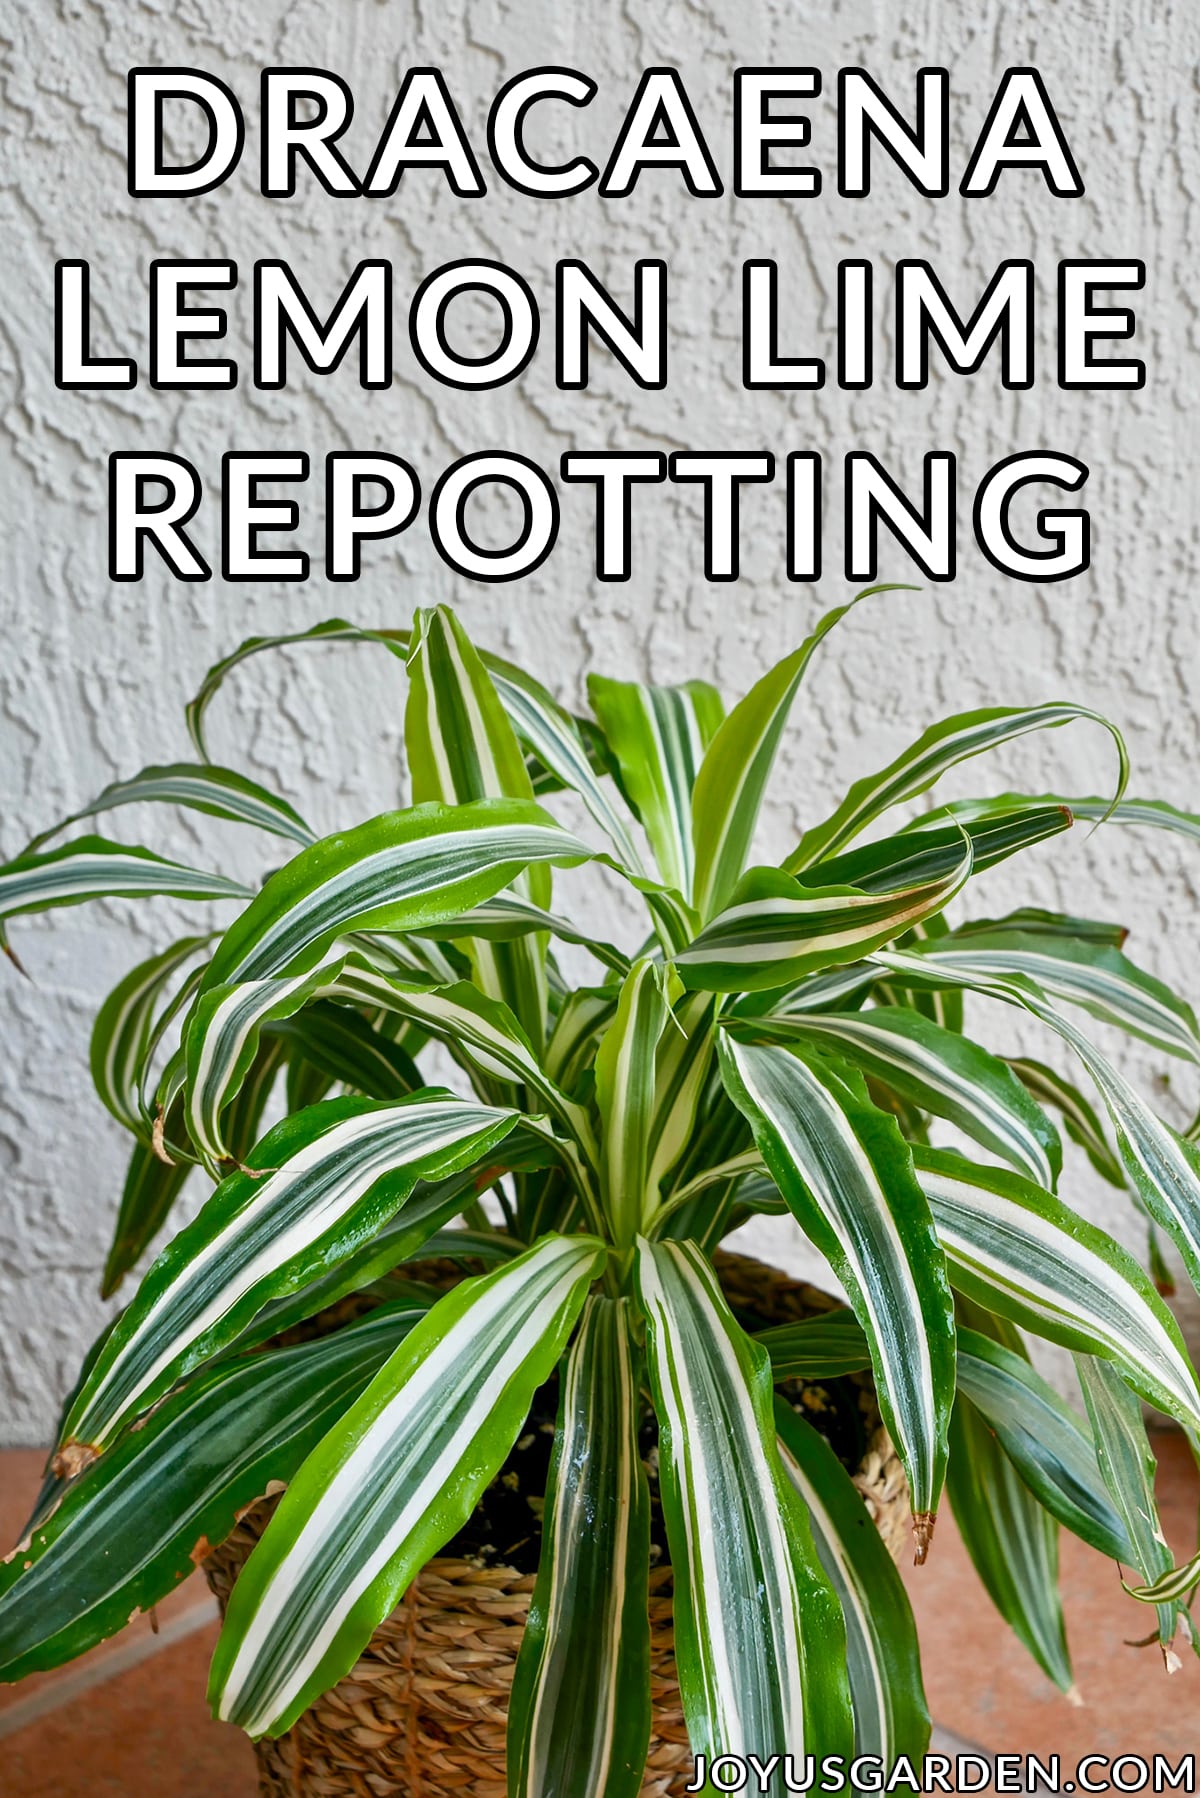  Dracaena Lemon Lime Repotting: ການປະສົມທີ່ຈະໃຊ້ &amp; amp; ຂັ້ນຕອນທີ່ຈະເຮັດ